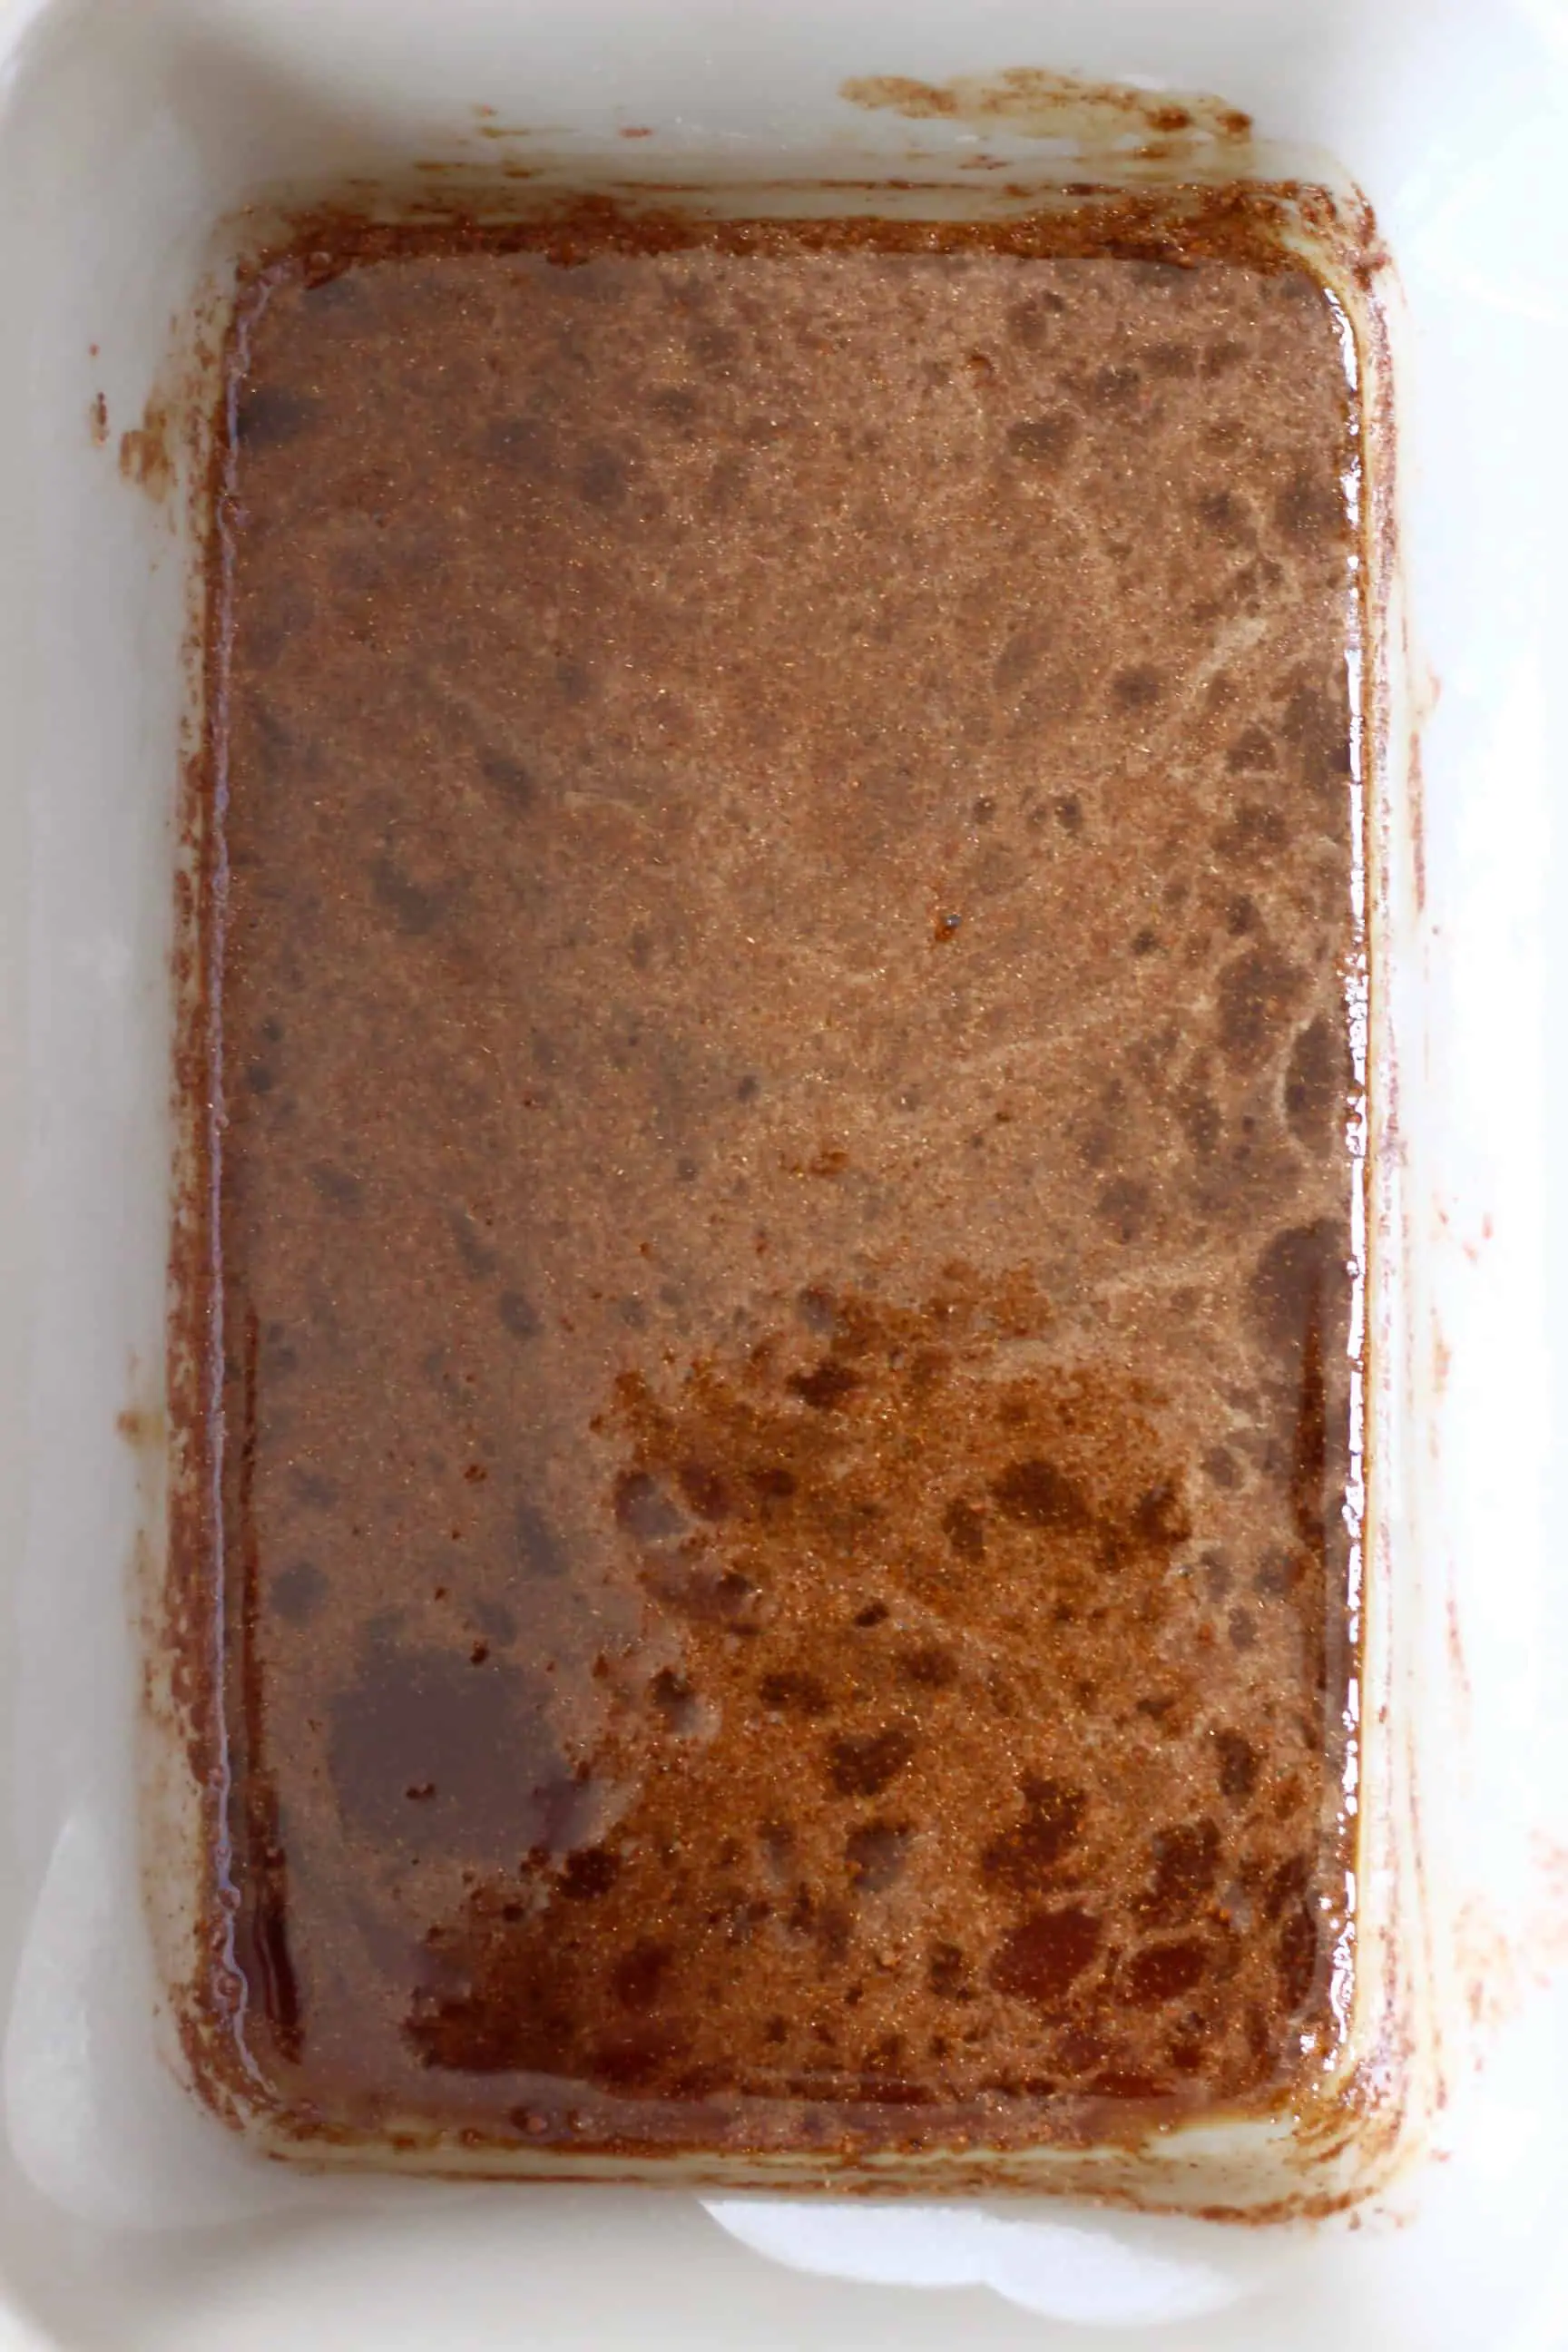 Dark brown caramel sauce for baked apples in a rectangular baking dish